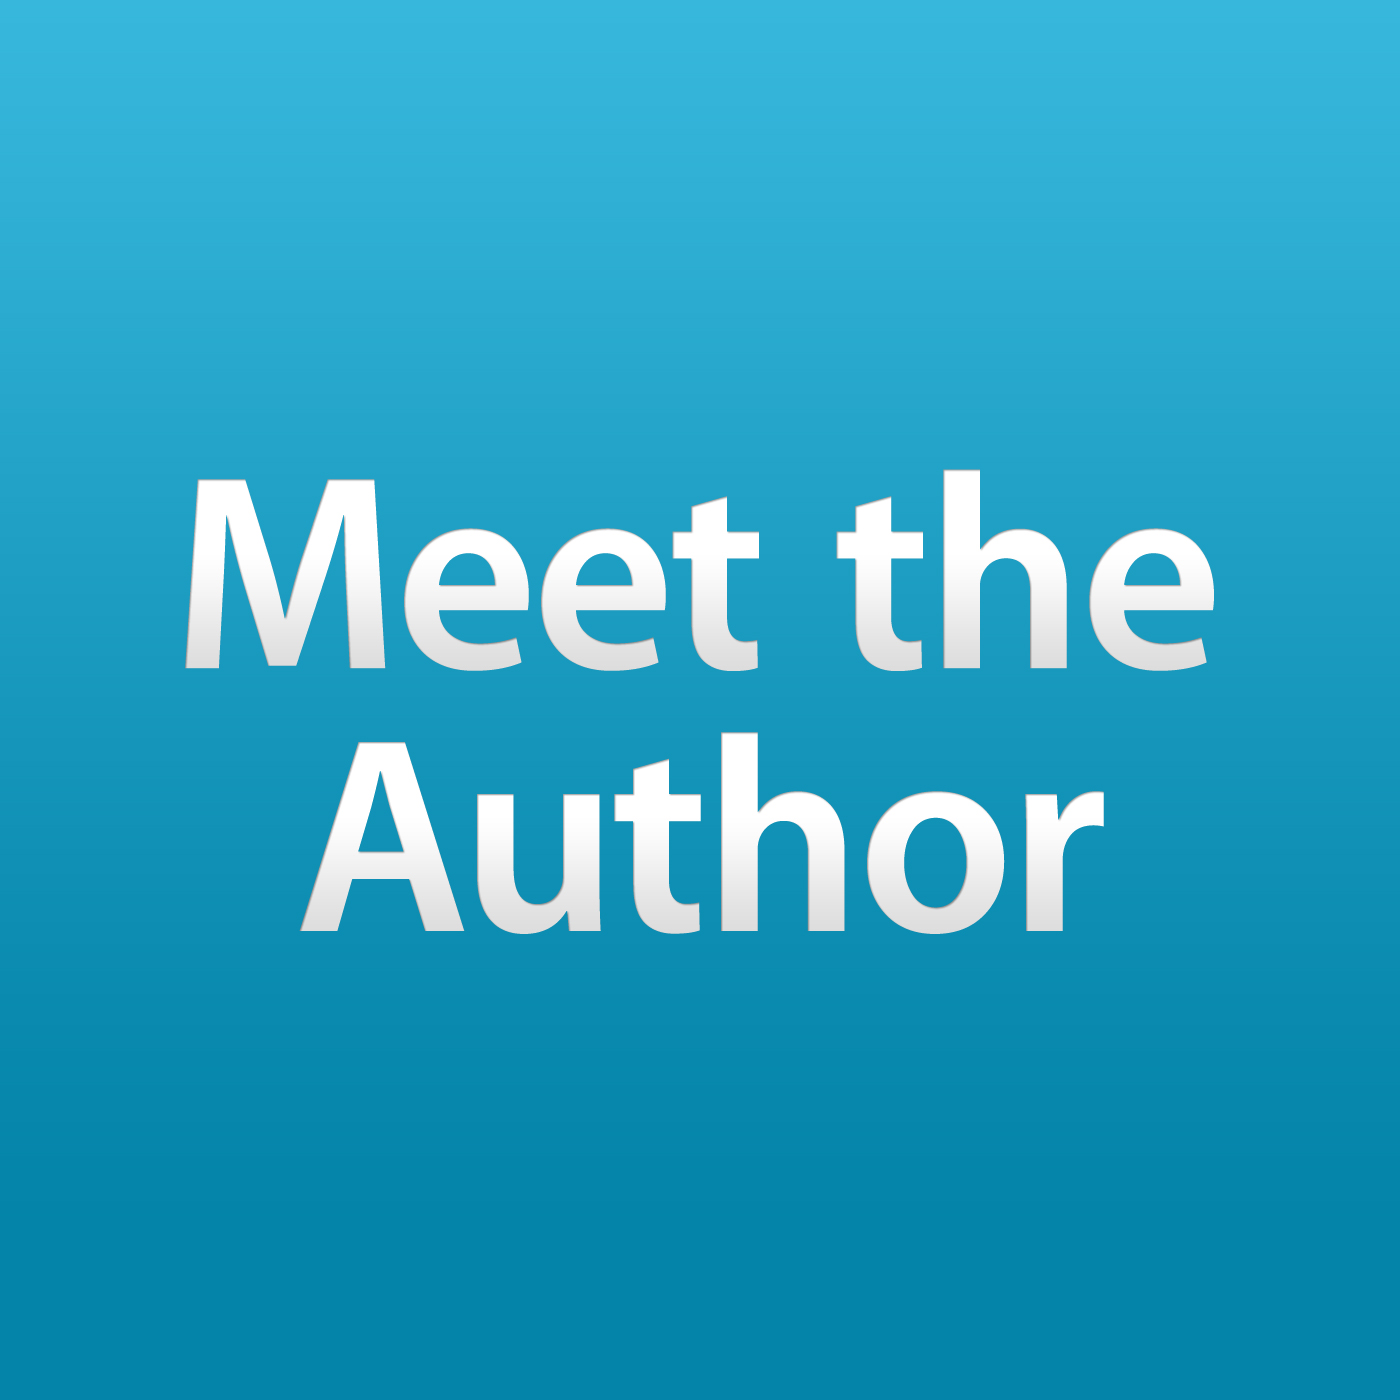 Meet the Author